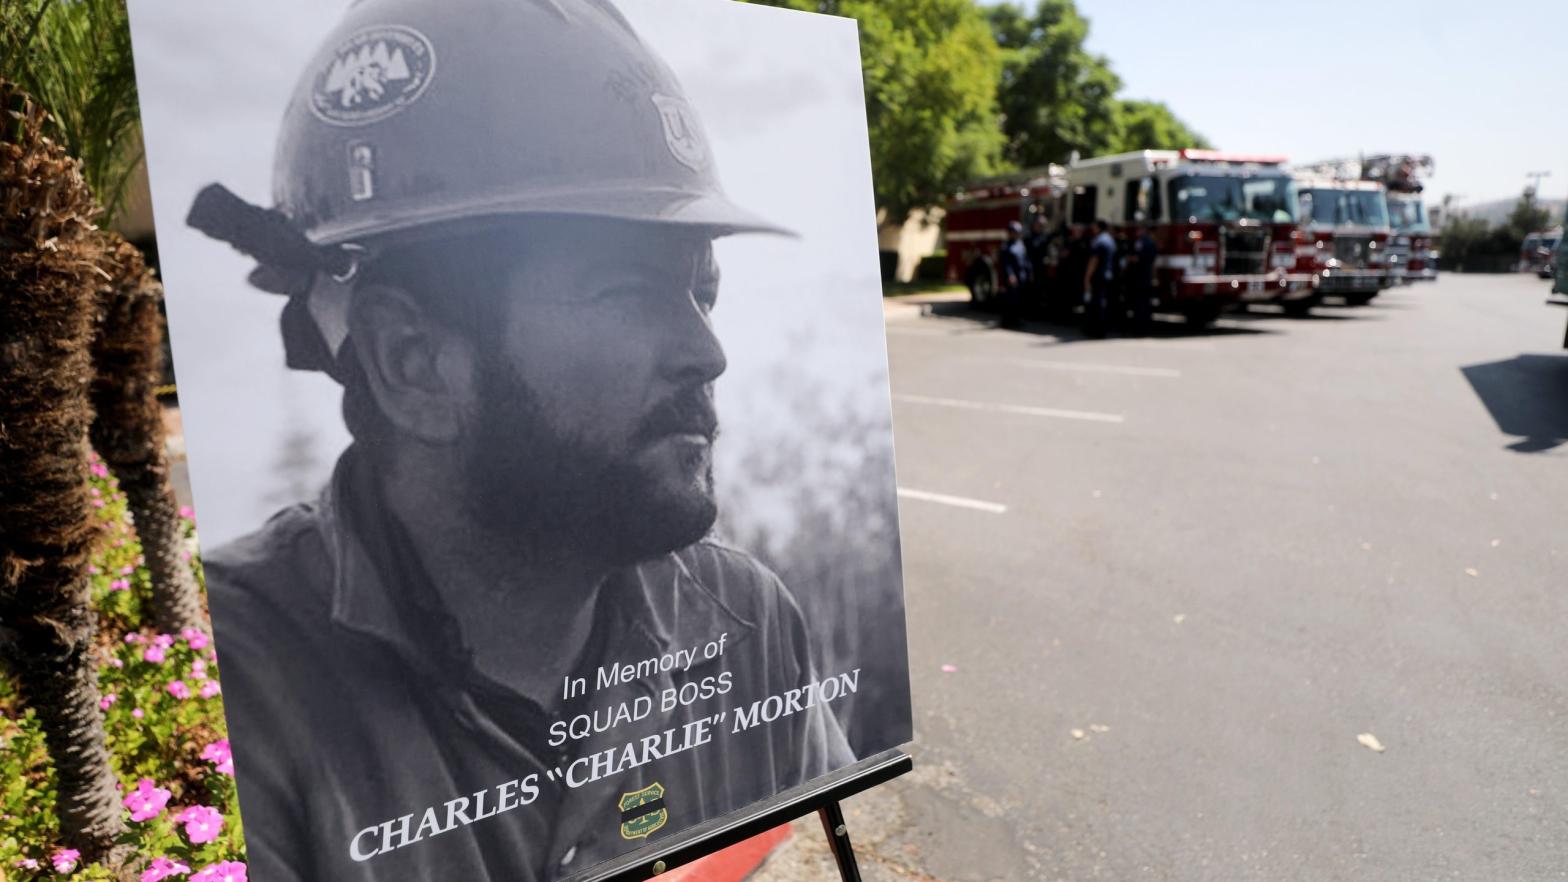 A photo of Charles Morton, the Big Bear Interagency Hotshot fire team leader who perished fighting the El Dorado wildfire, at a memorial service in San Bernardino on Sept. 25, 2020. (Photo: Mario Tama, Getty Images)